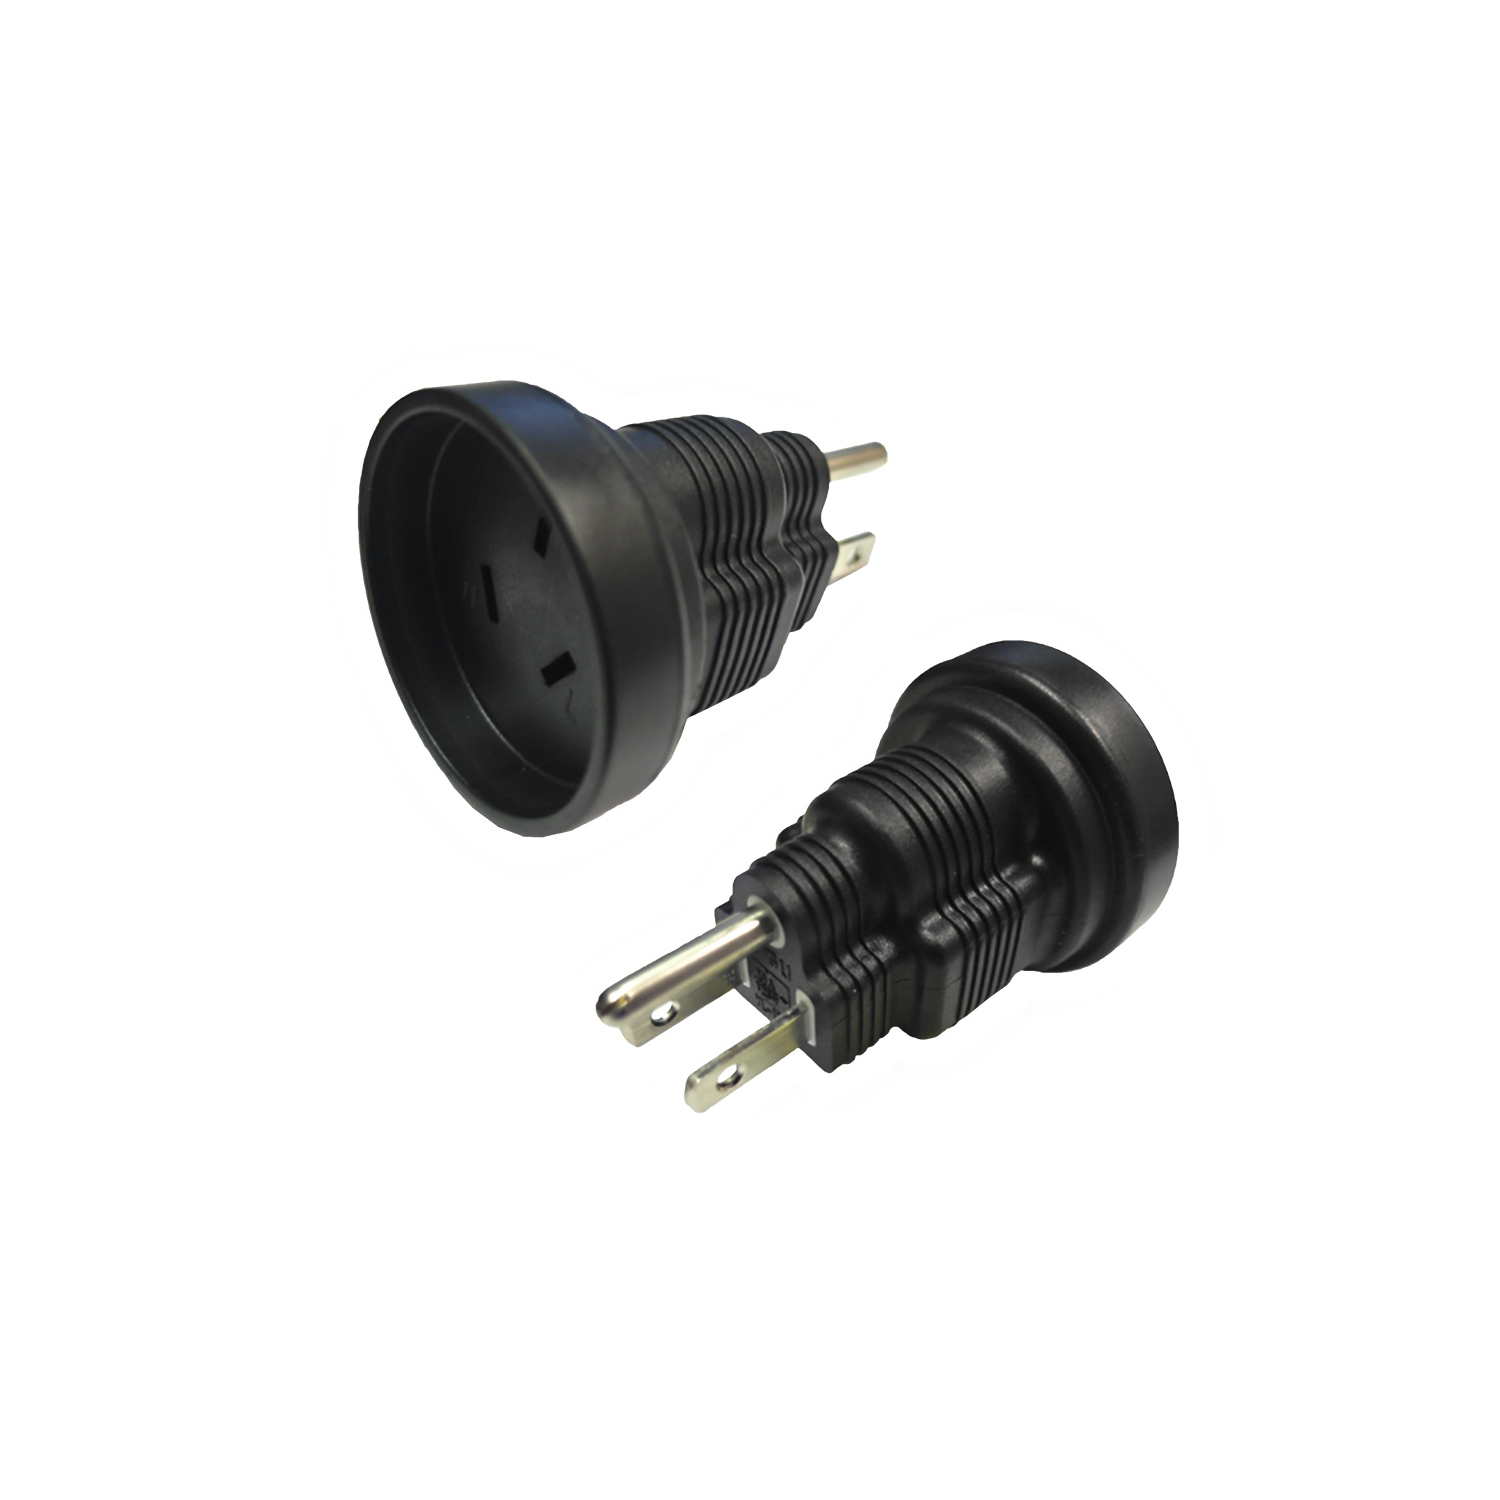 Hyfai Australia AS3112 Female Receptacle to 5-15P Male Plug Power Cord Converter Adapter 2PK